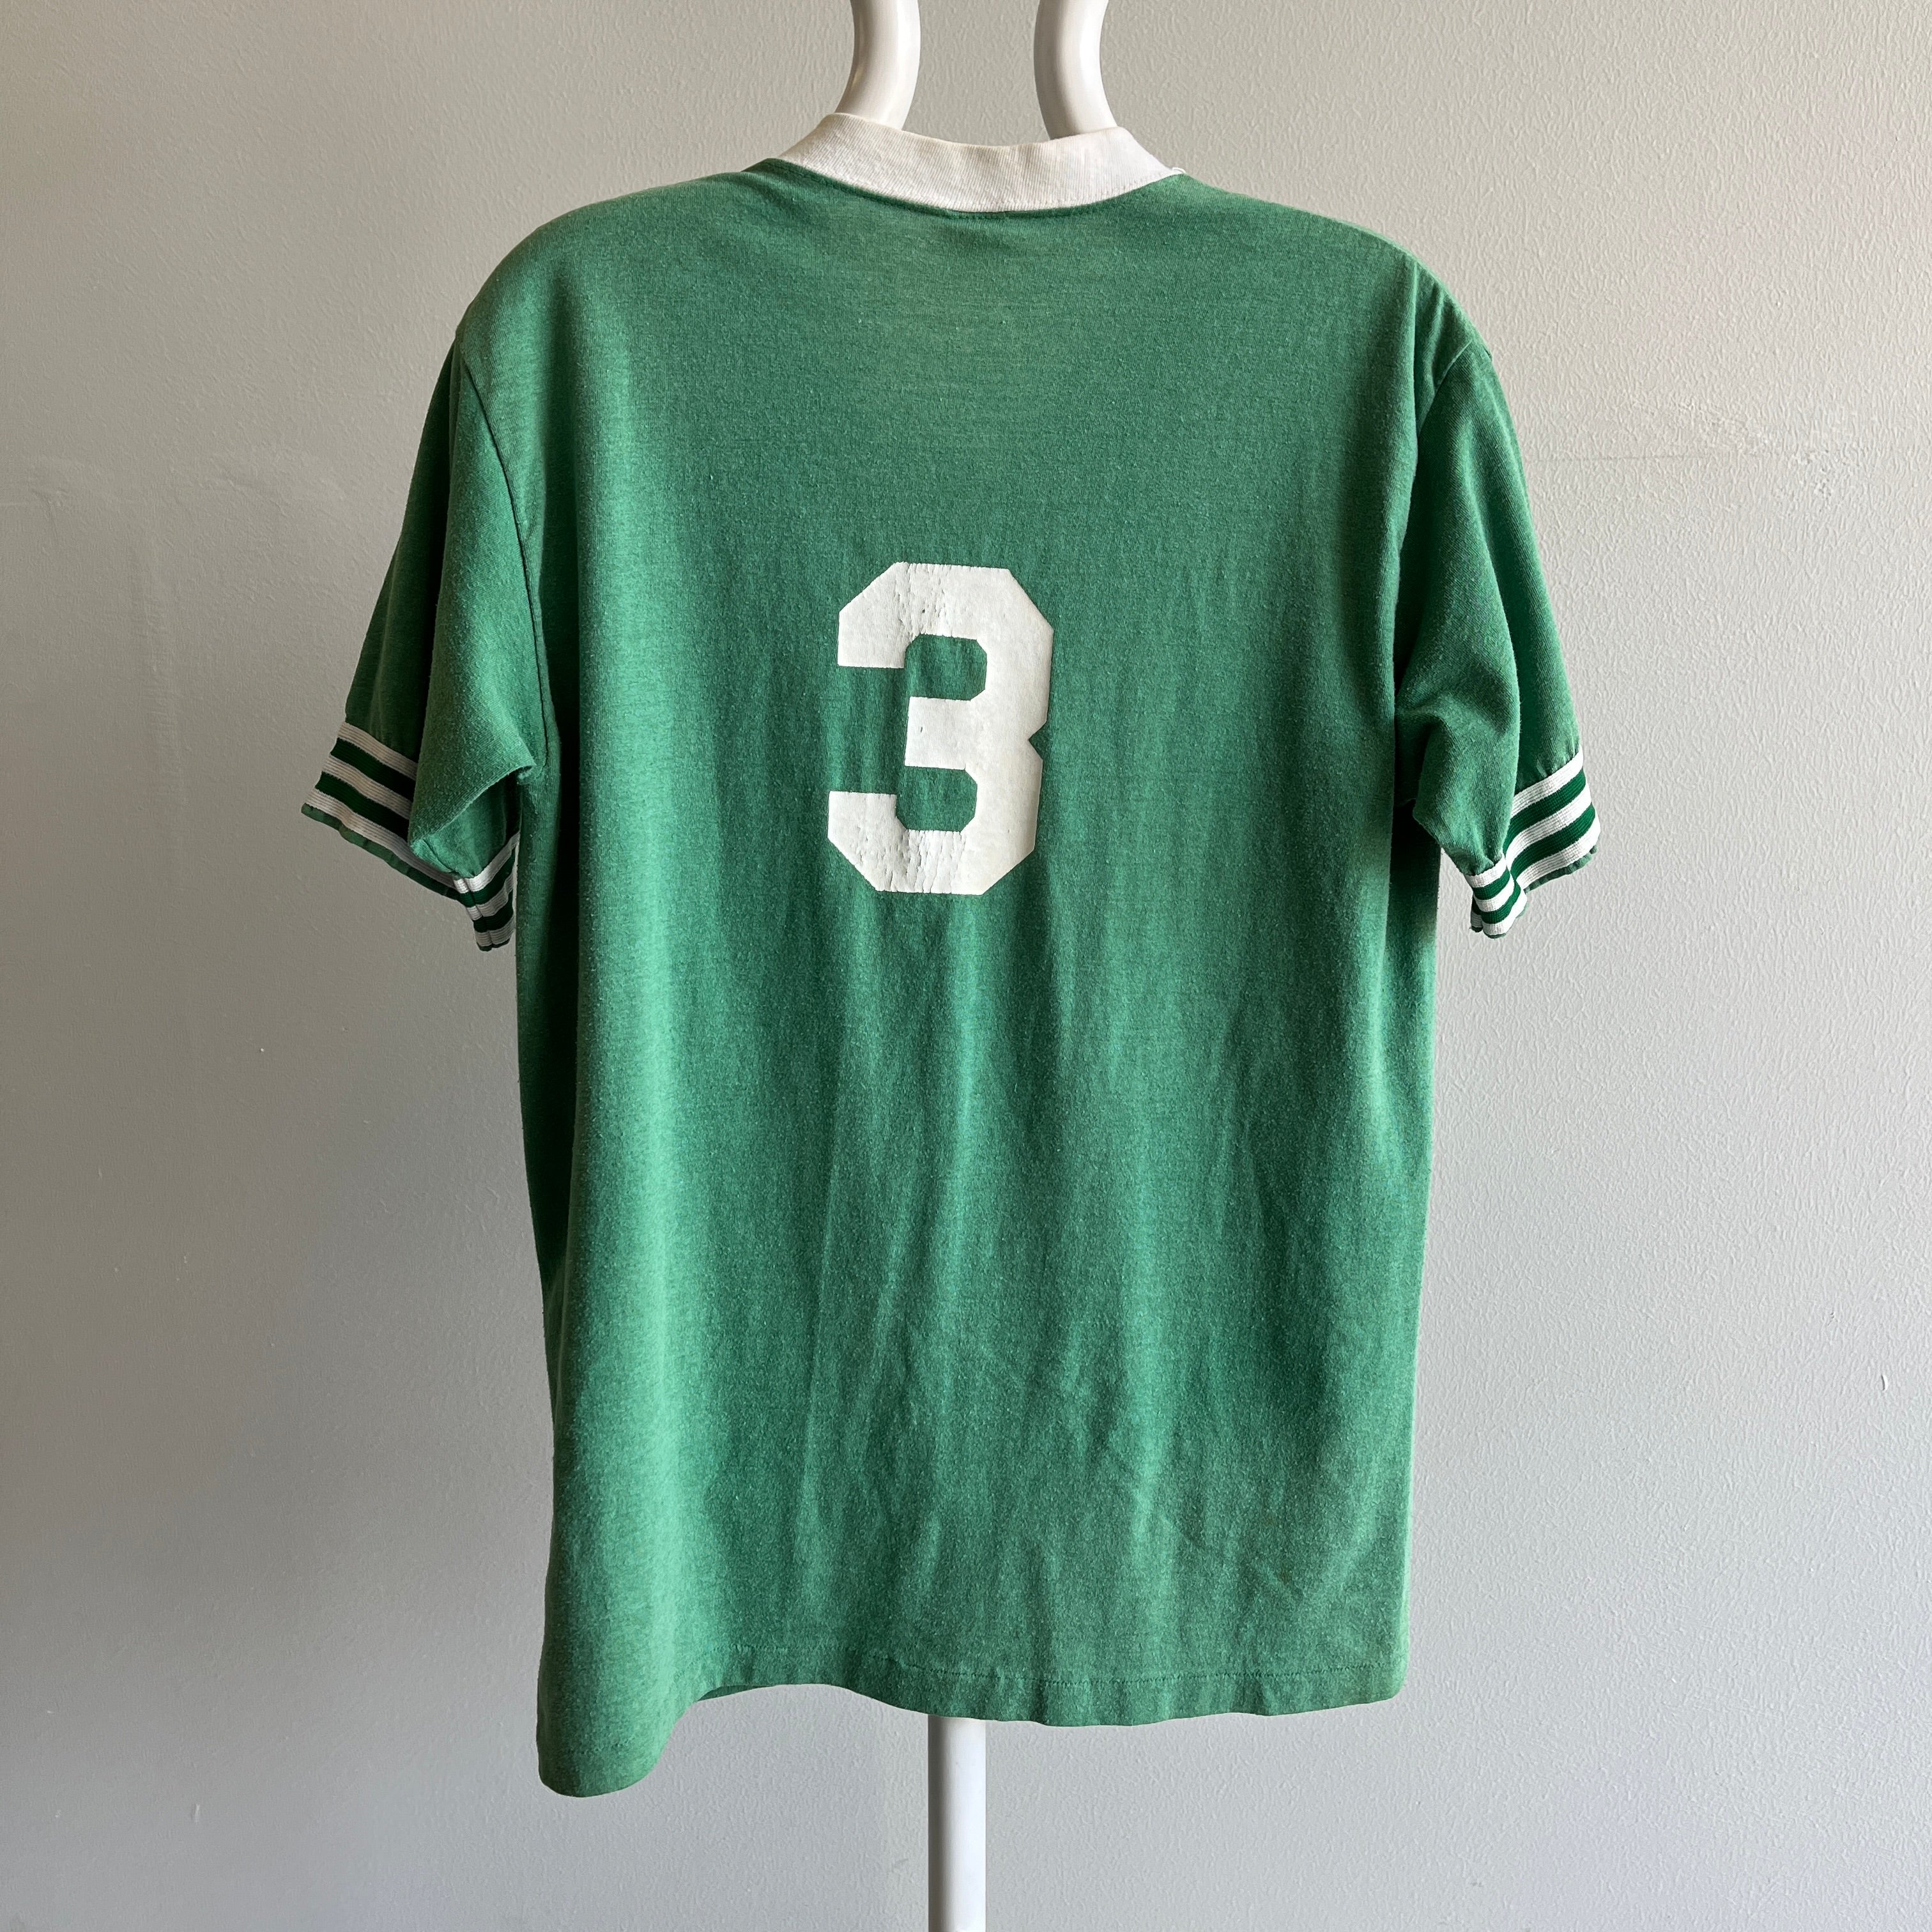 1970s WKM No. 3 V-Neck Sports T-Shirt by Sportswear